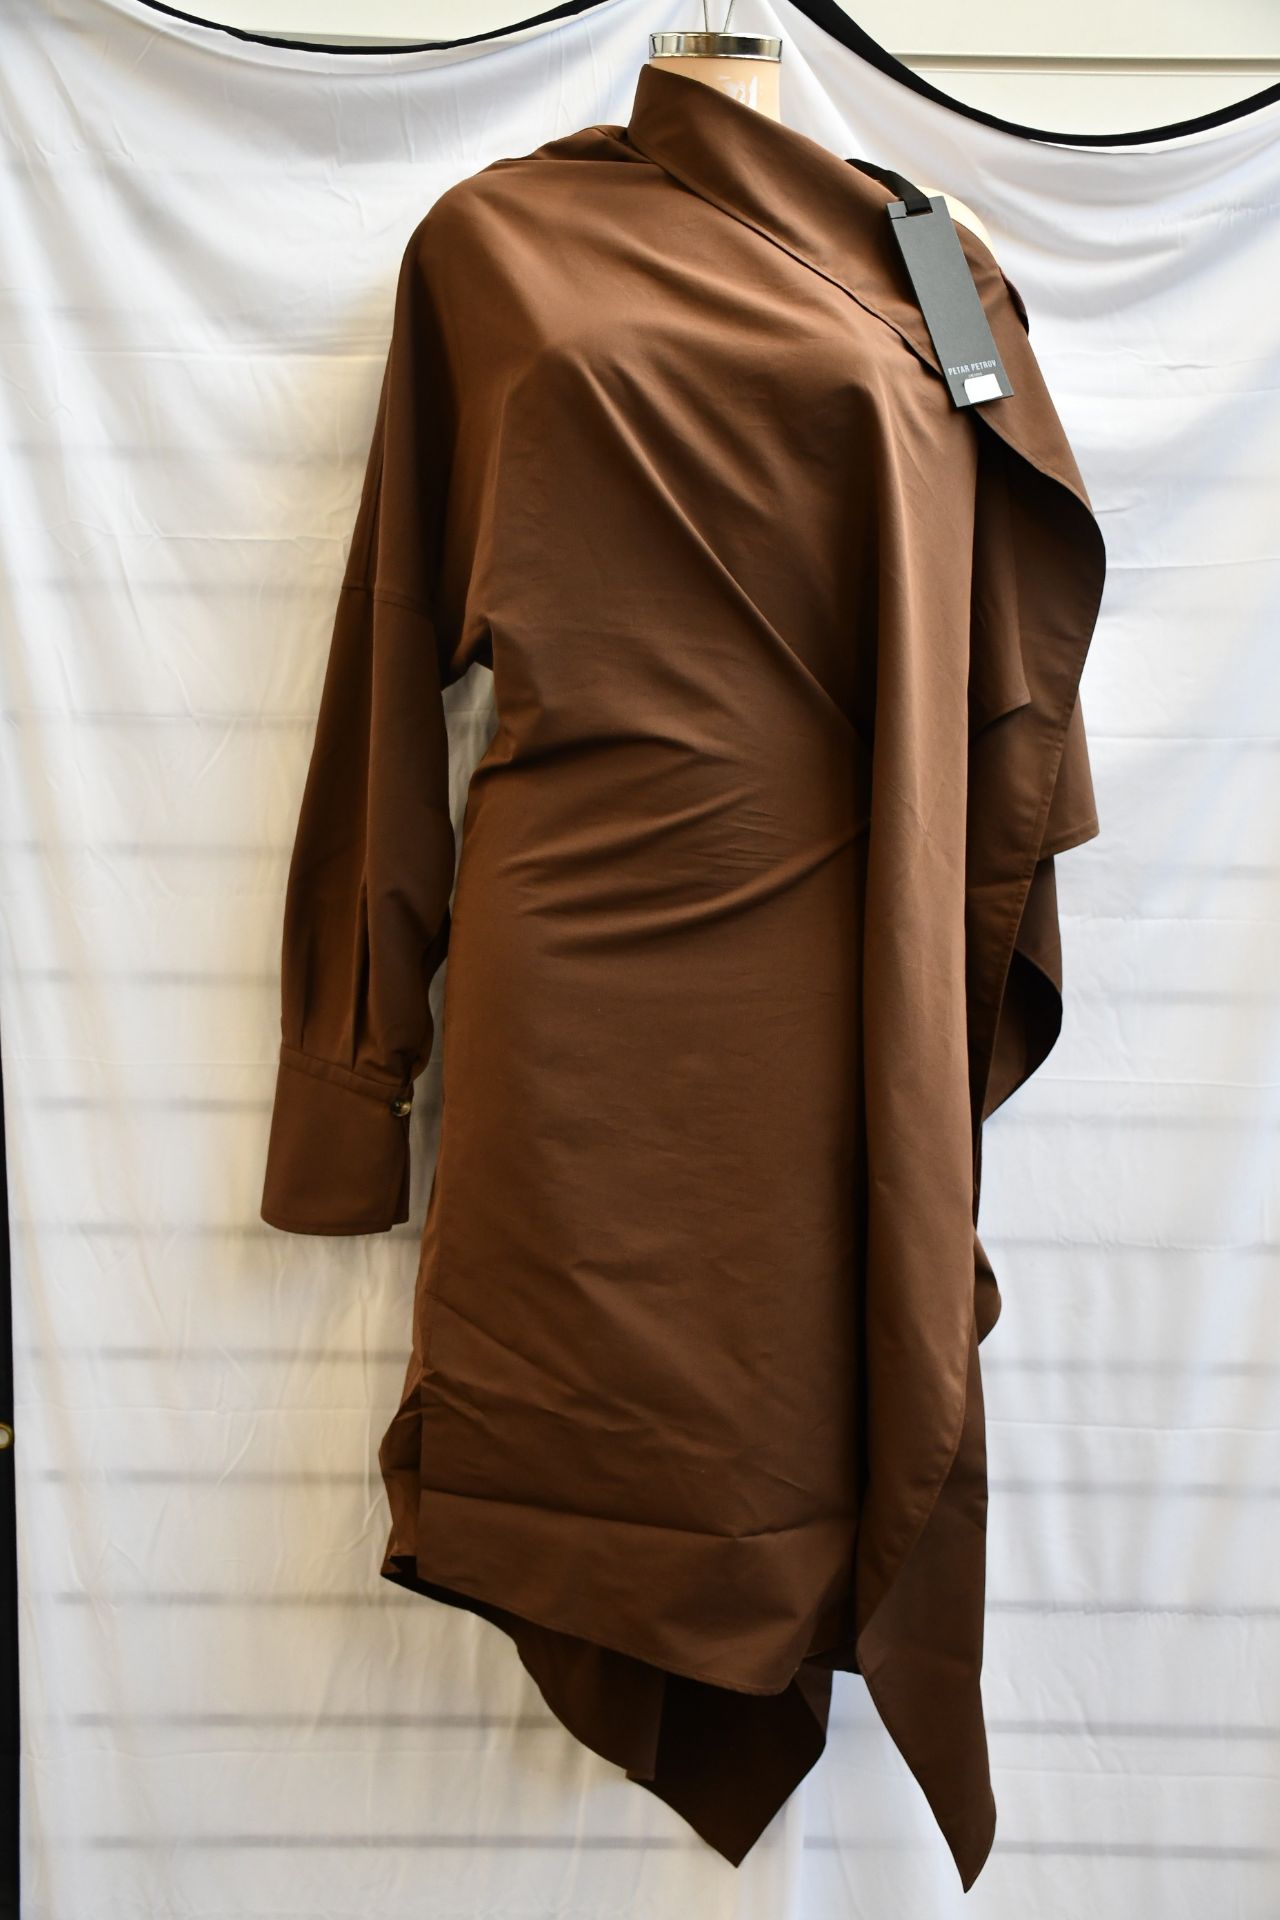 An as new Petar Petrov Aaber asymmetric midi dress in dark chocolate (EU 38 - RRP £1,200).